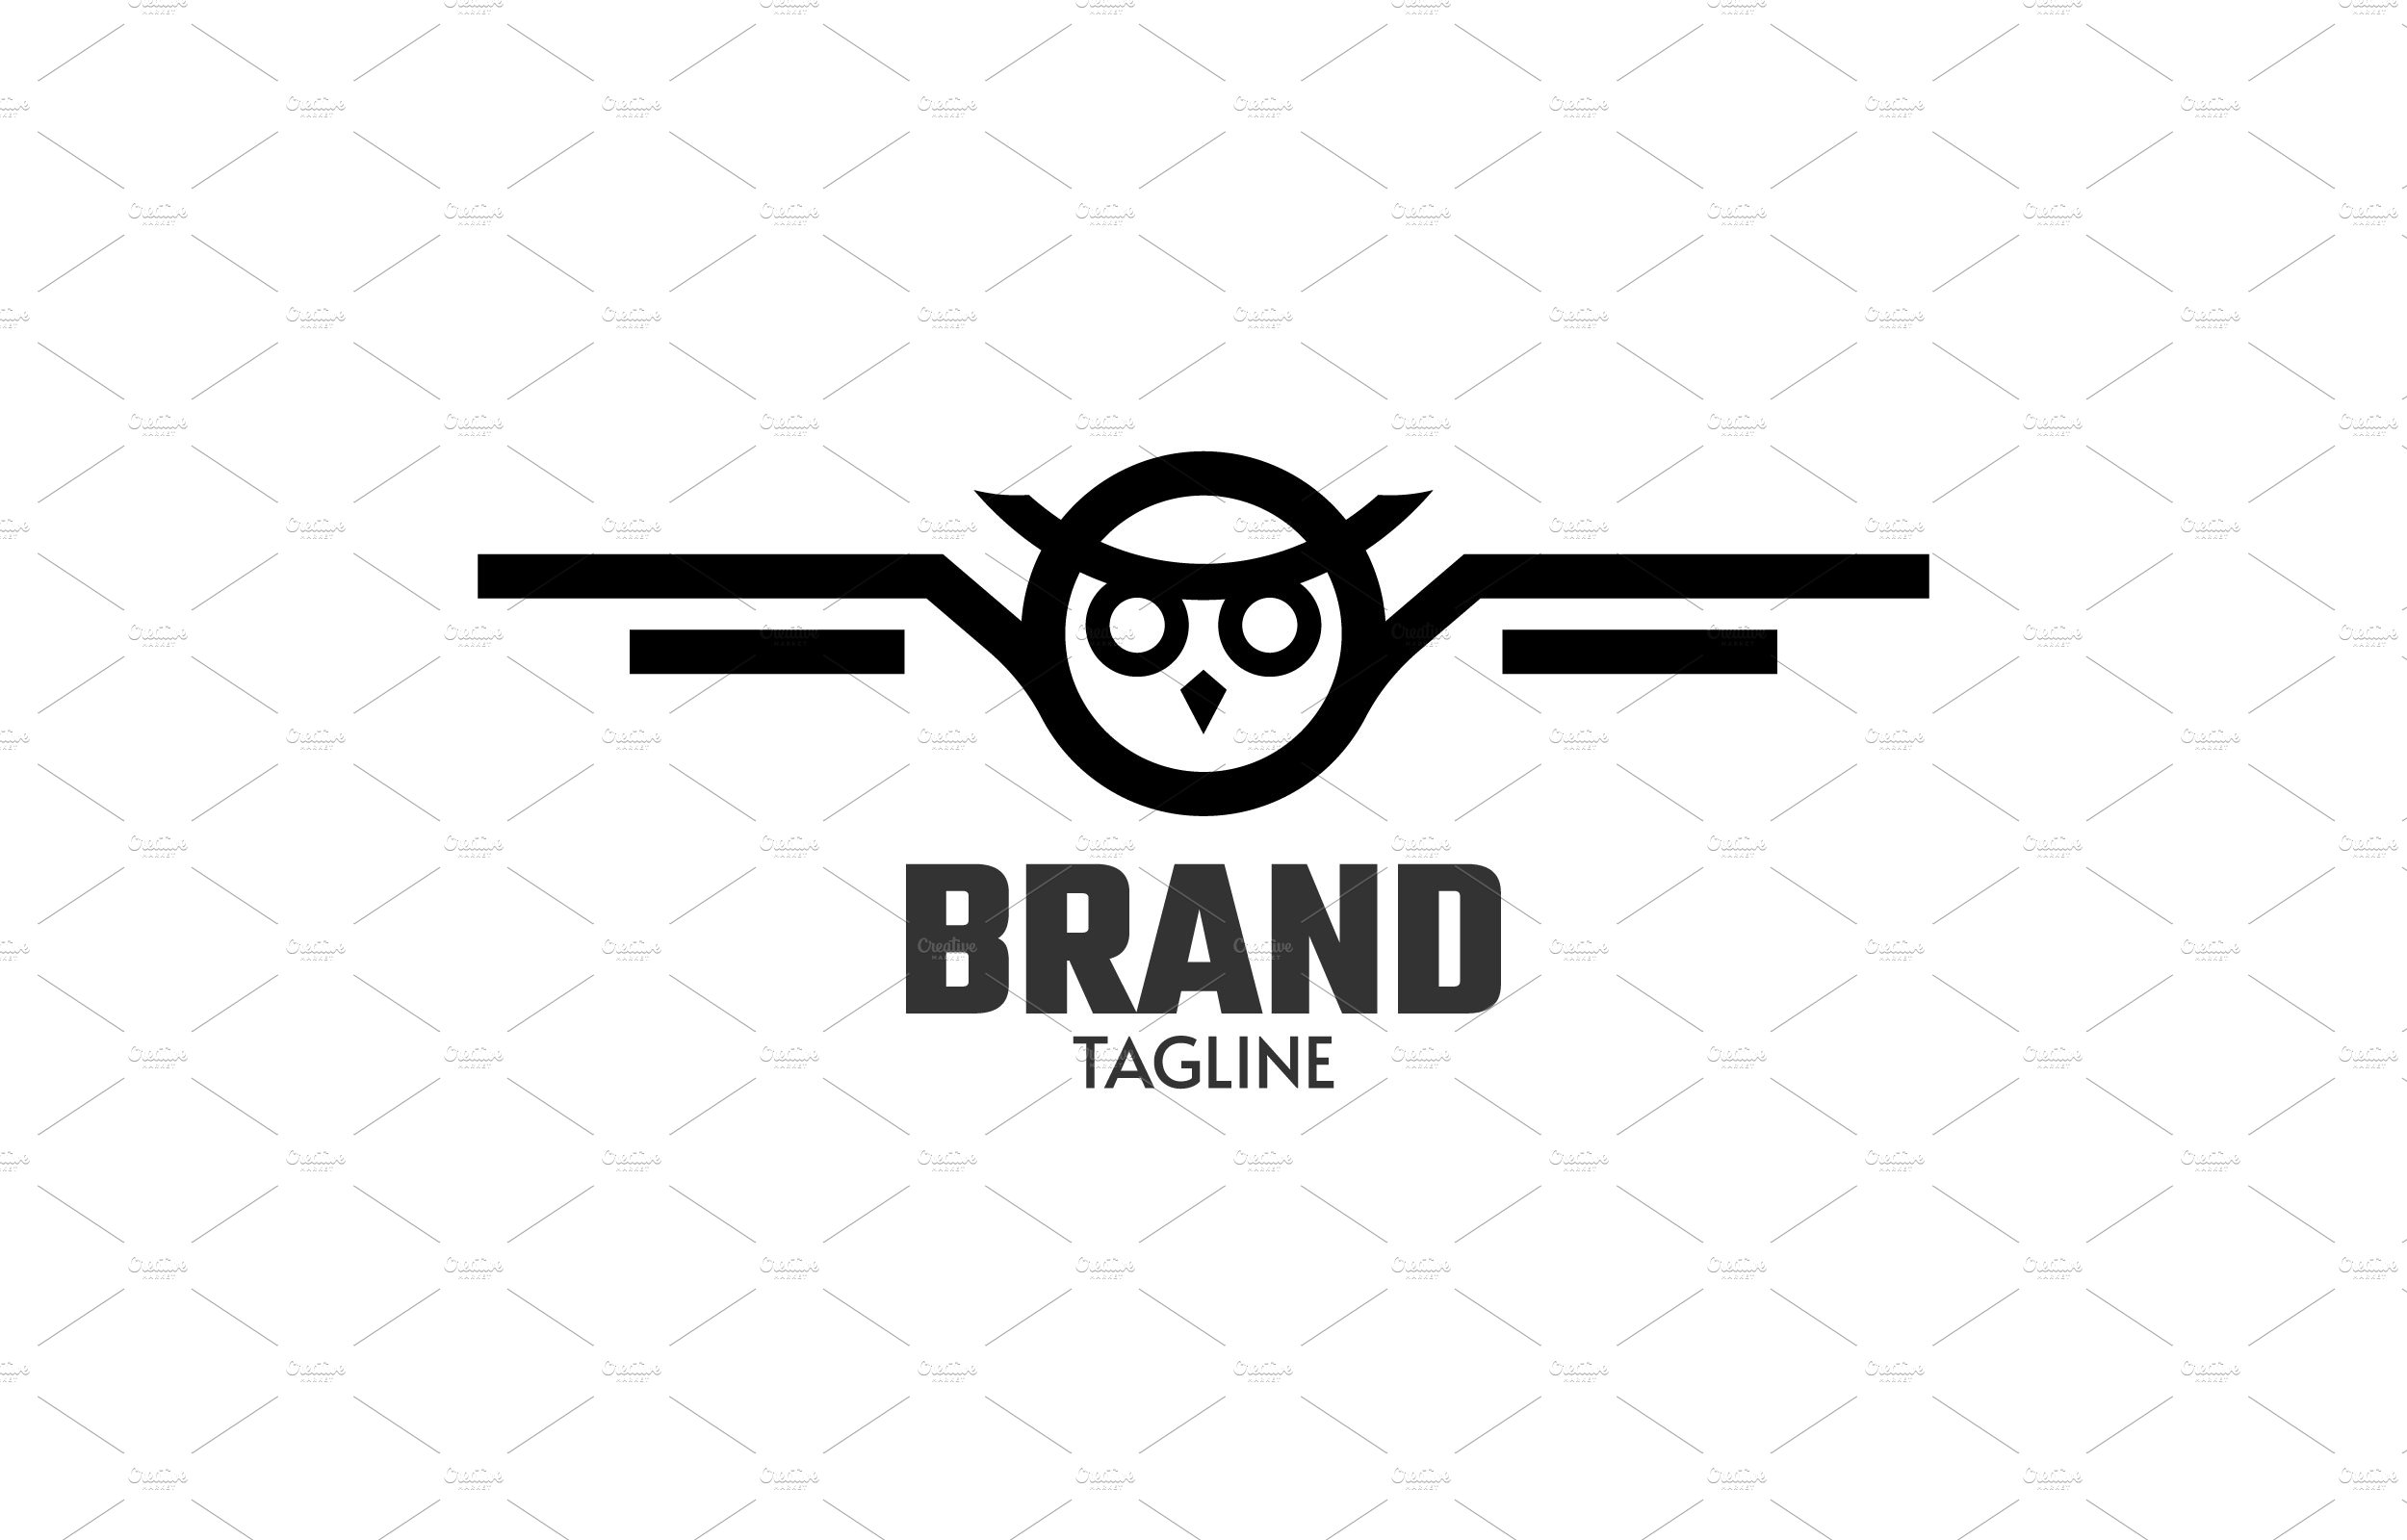 Owl simple logo design template cover image.